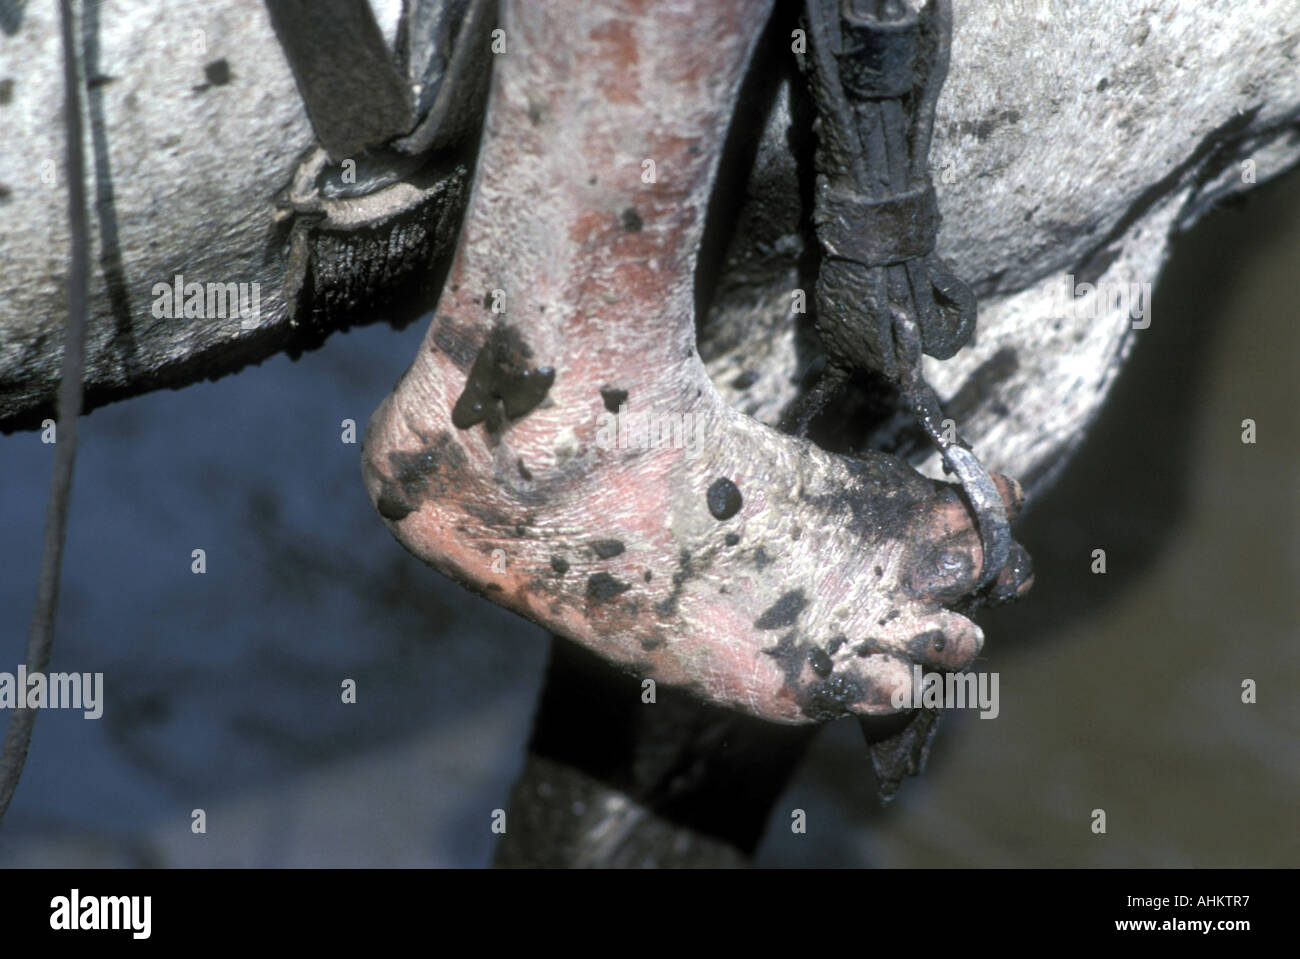 http://c8.alamy.com/comp/AHKTR7/venezuela-apure-state-llaneros-cowboy-rides-barefoot-through-mud-on-AHKTR7.jpg